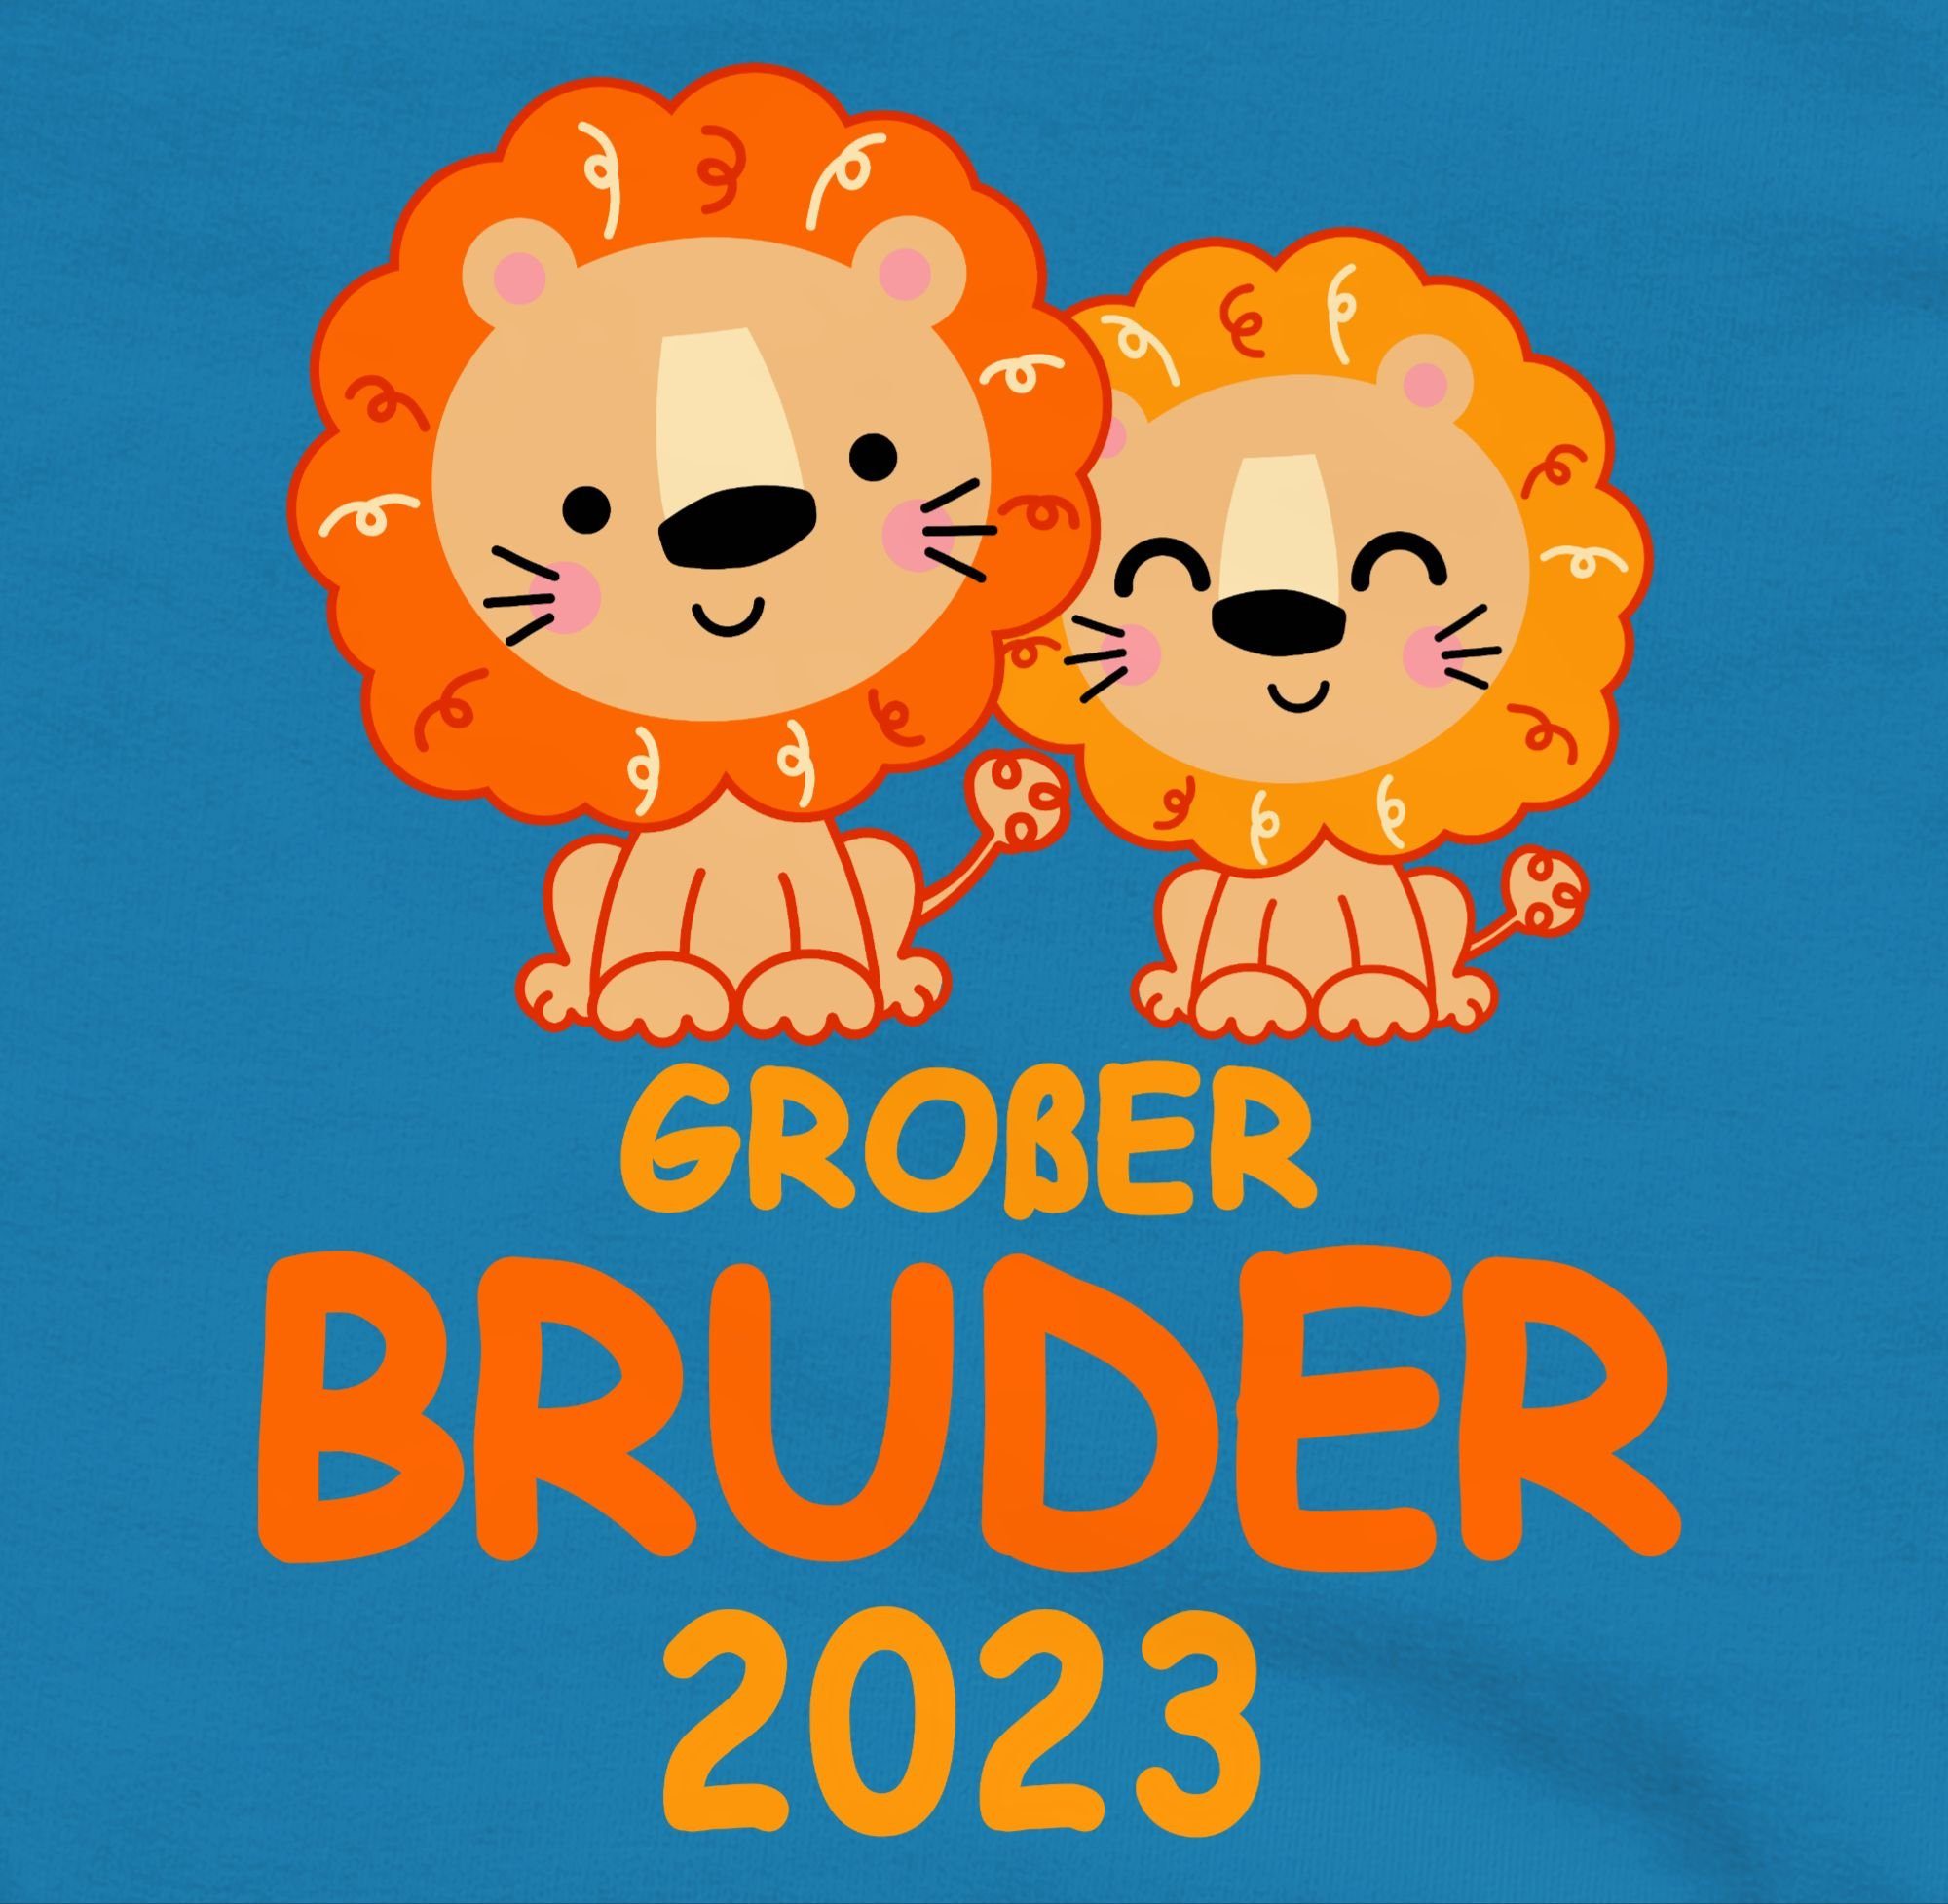 2023 2 Bruder mit Himmelblau Löwen Bruder Shirtracer Großer Hoodie Großer